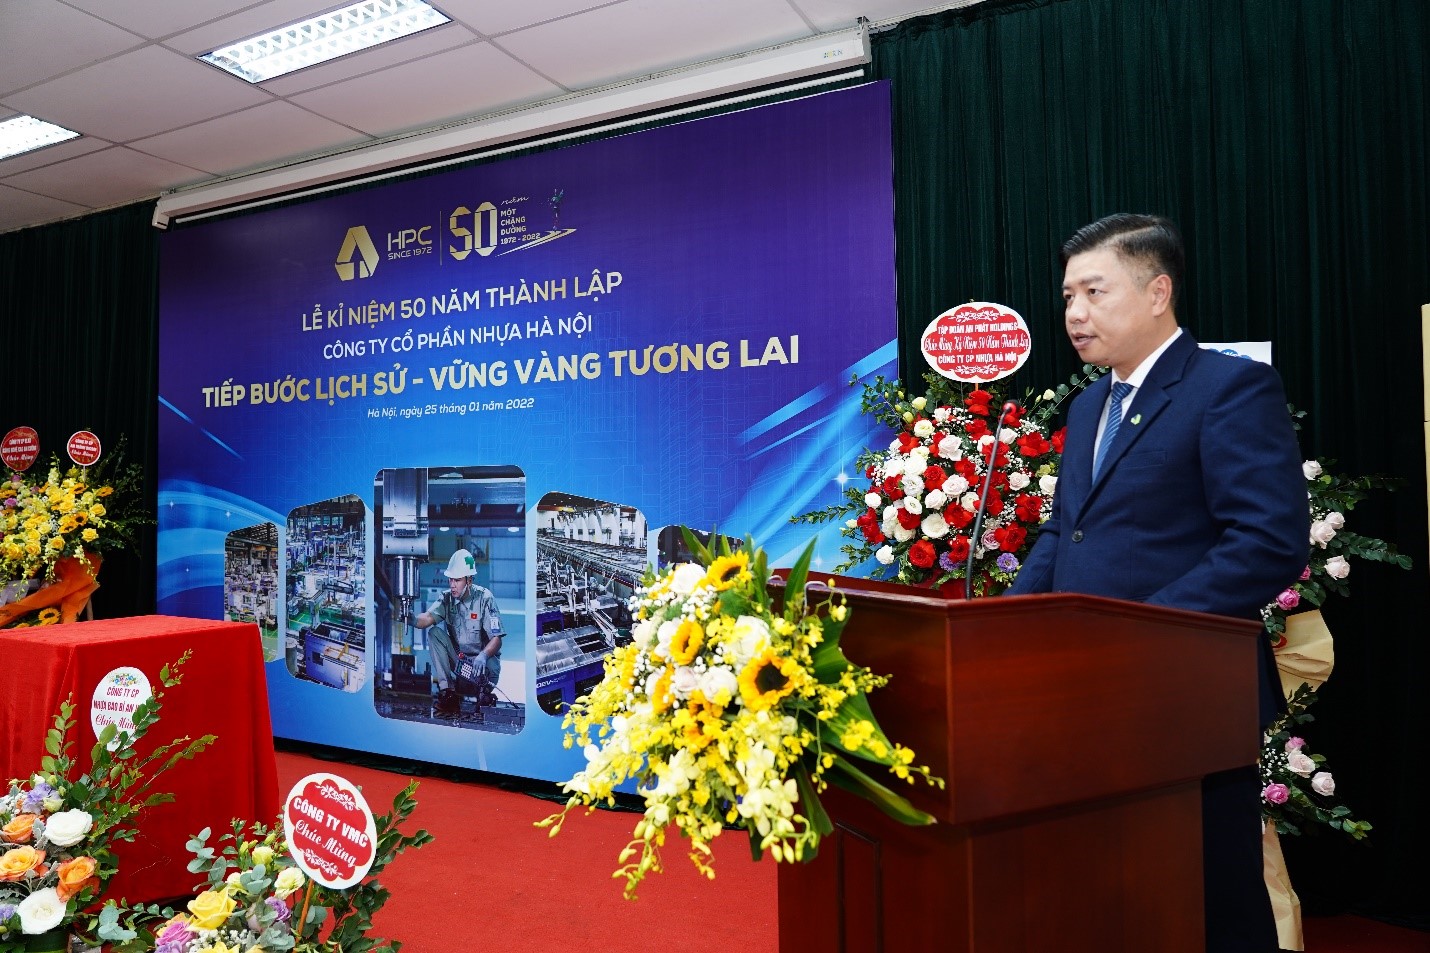 Mr. Bui Minh Hai - President of Hanoi Plastics JSC gave a salute at the 50th years of establishment of Hanoi Plastics JSC ceremony